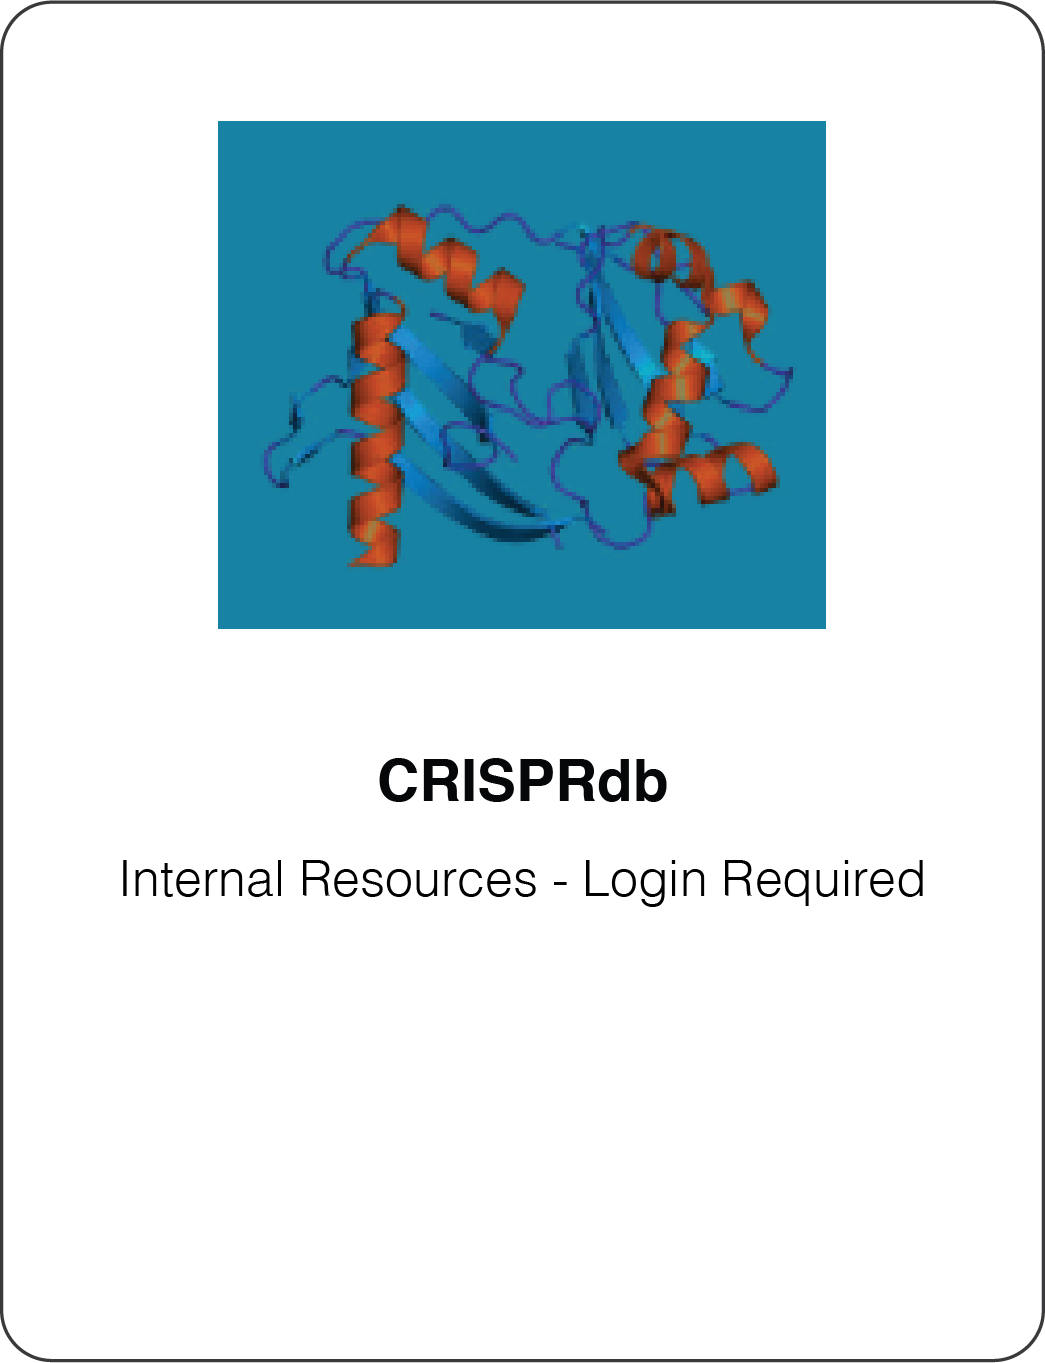 CRISPRdb logo